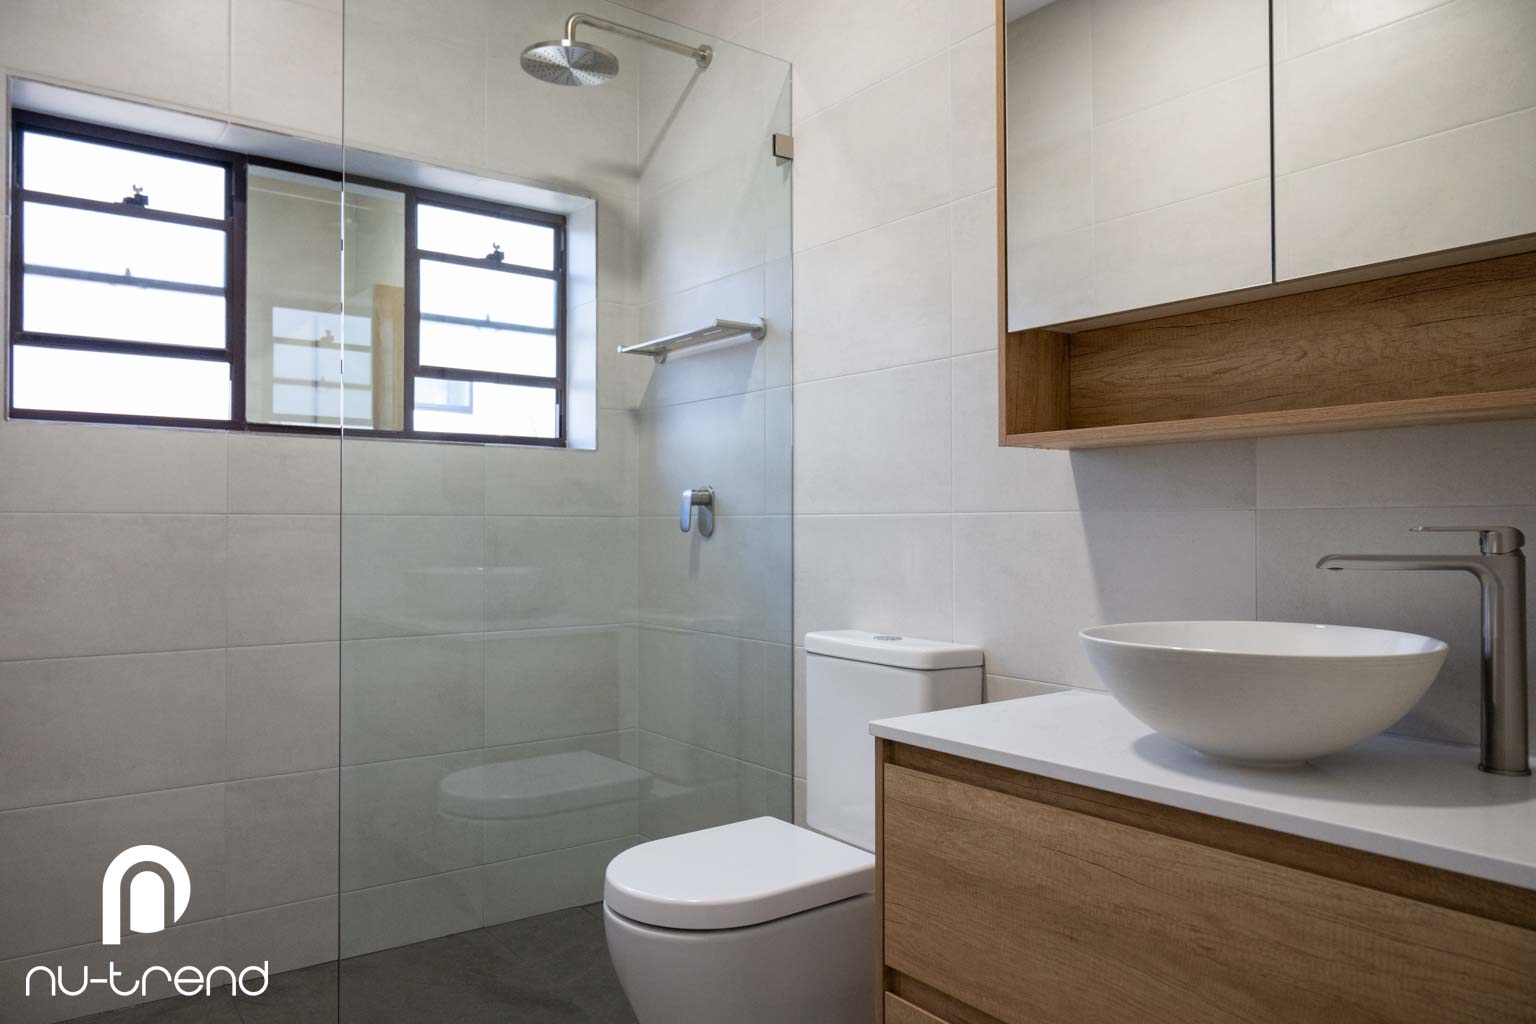 Complete bathroom renovation Maroubra Sydney new shower